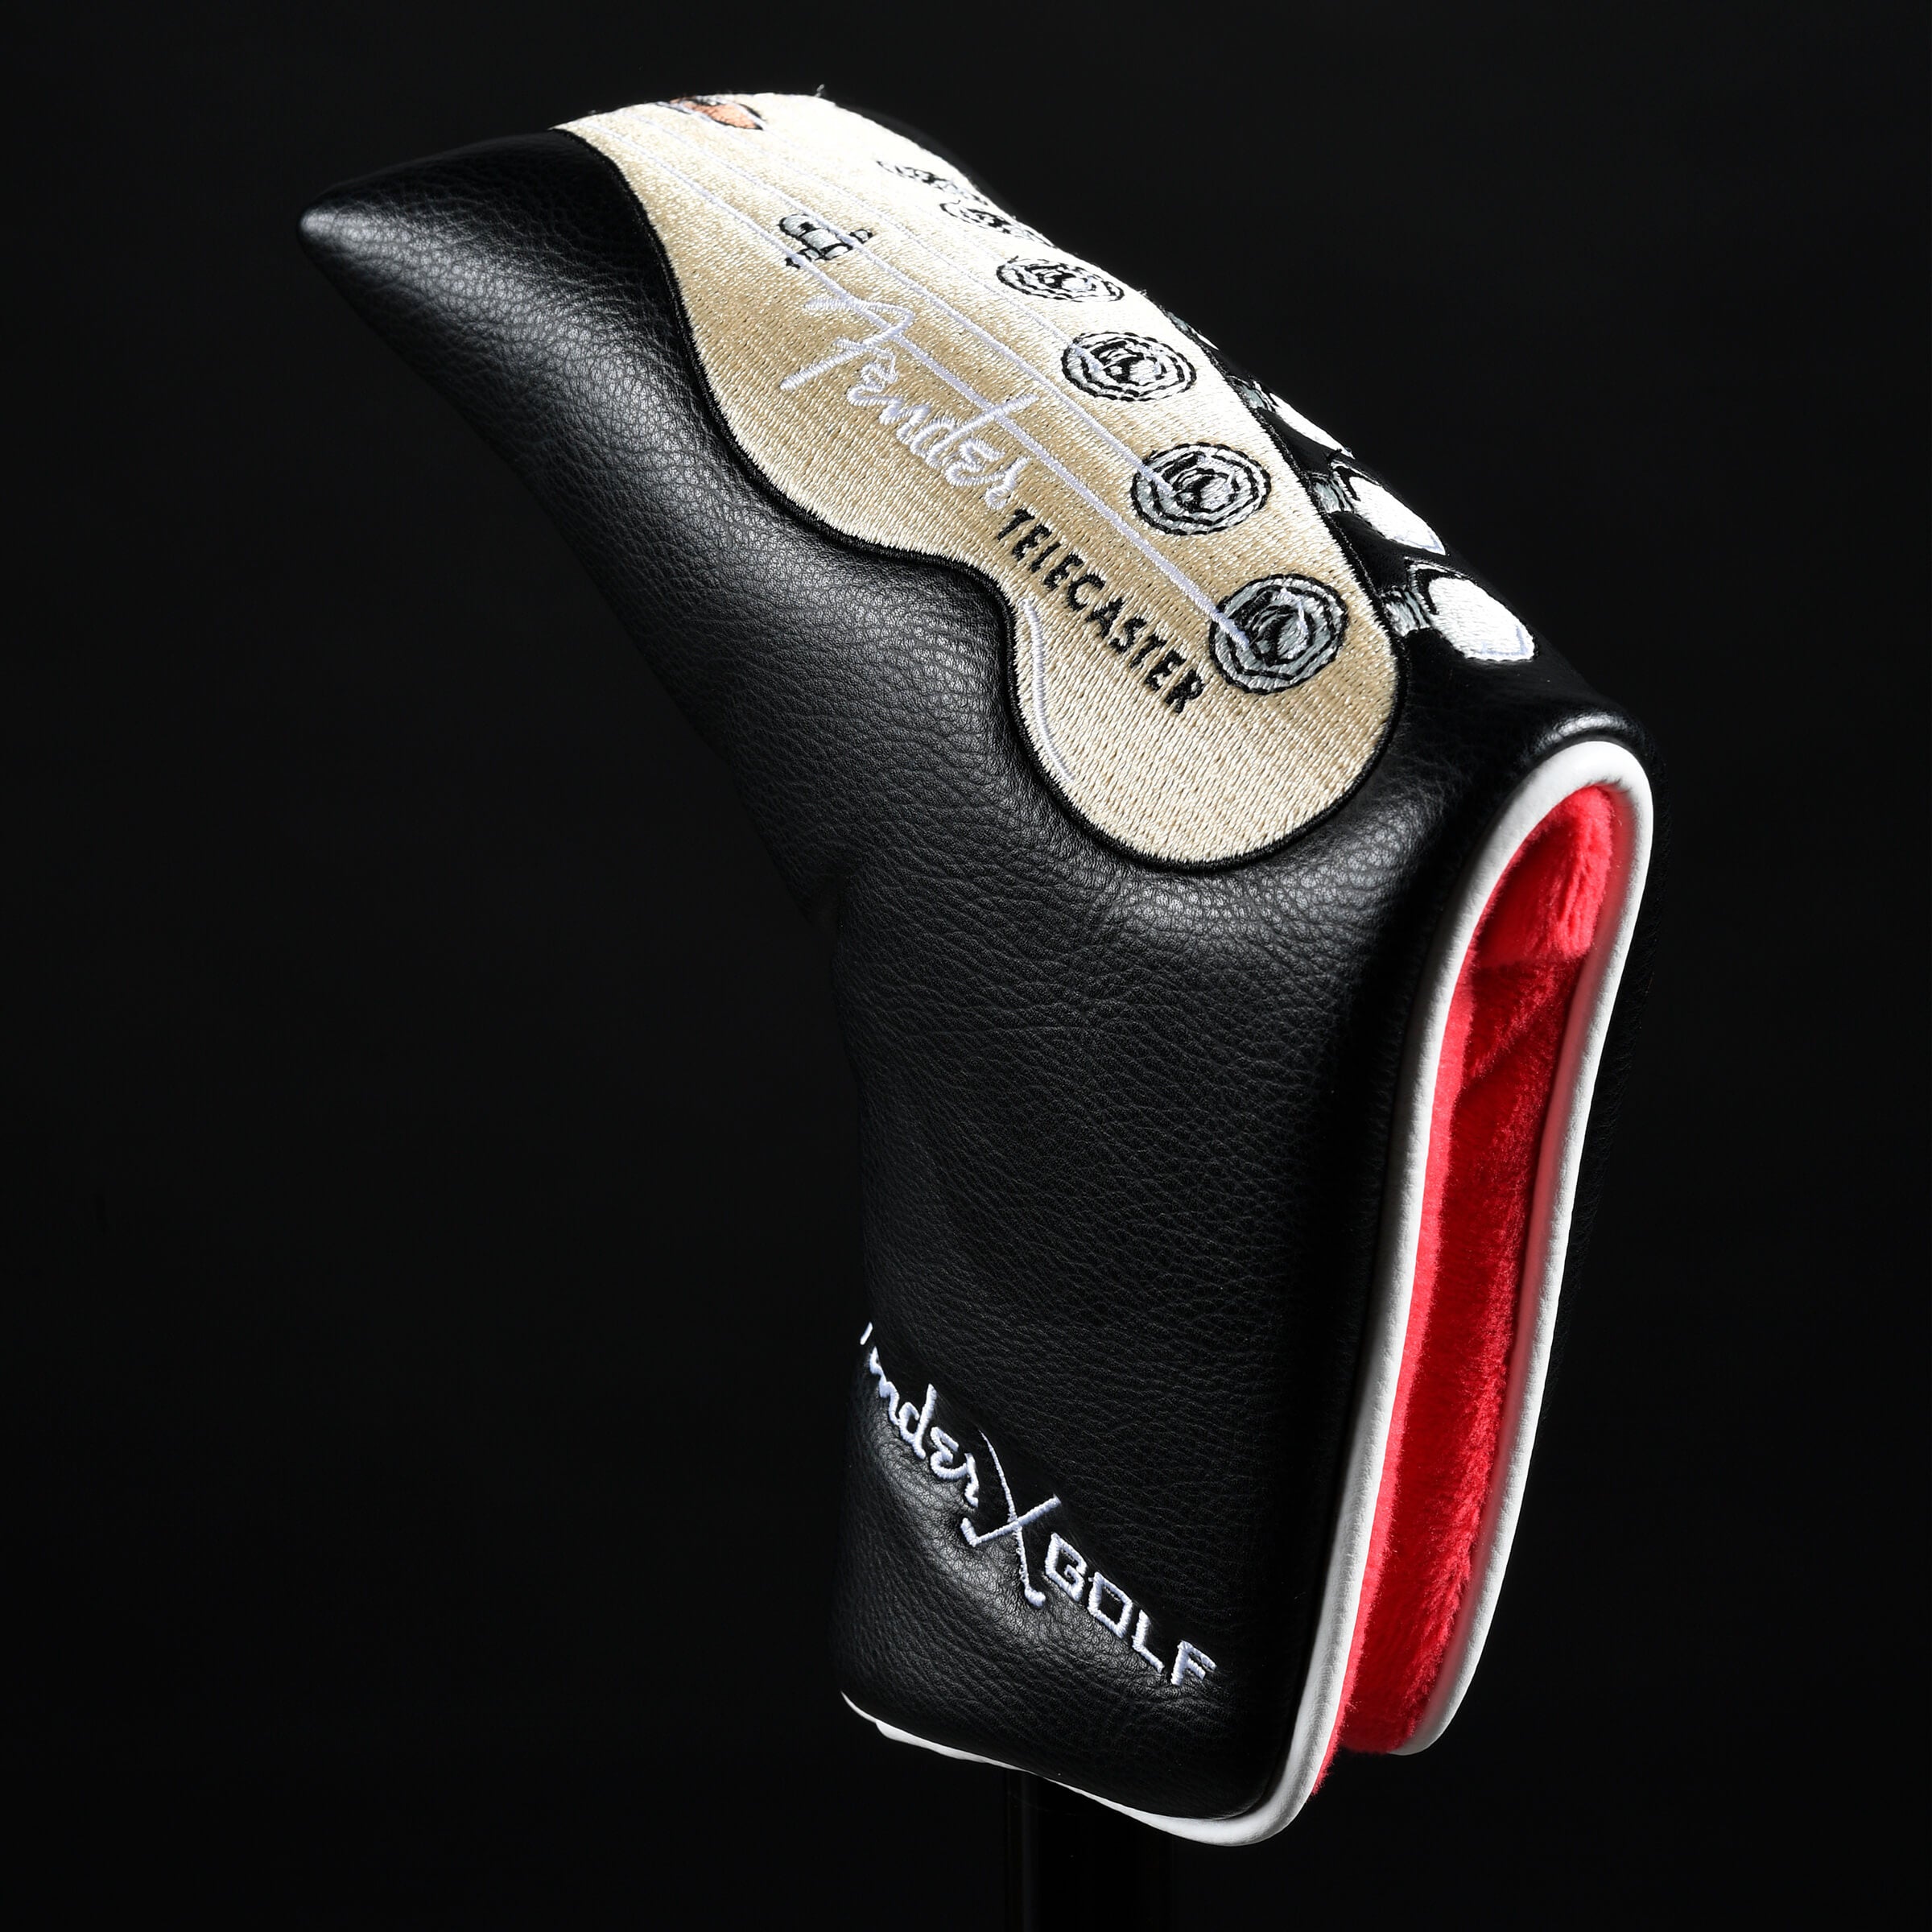 Fender Telecaster - Putter Blade Cover